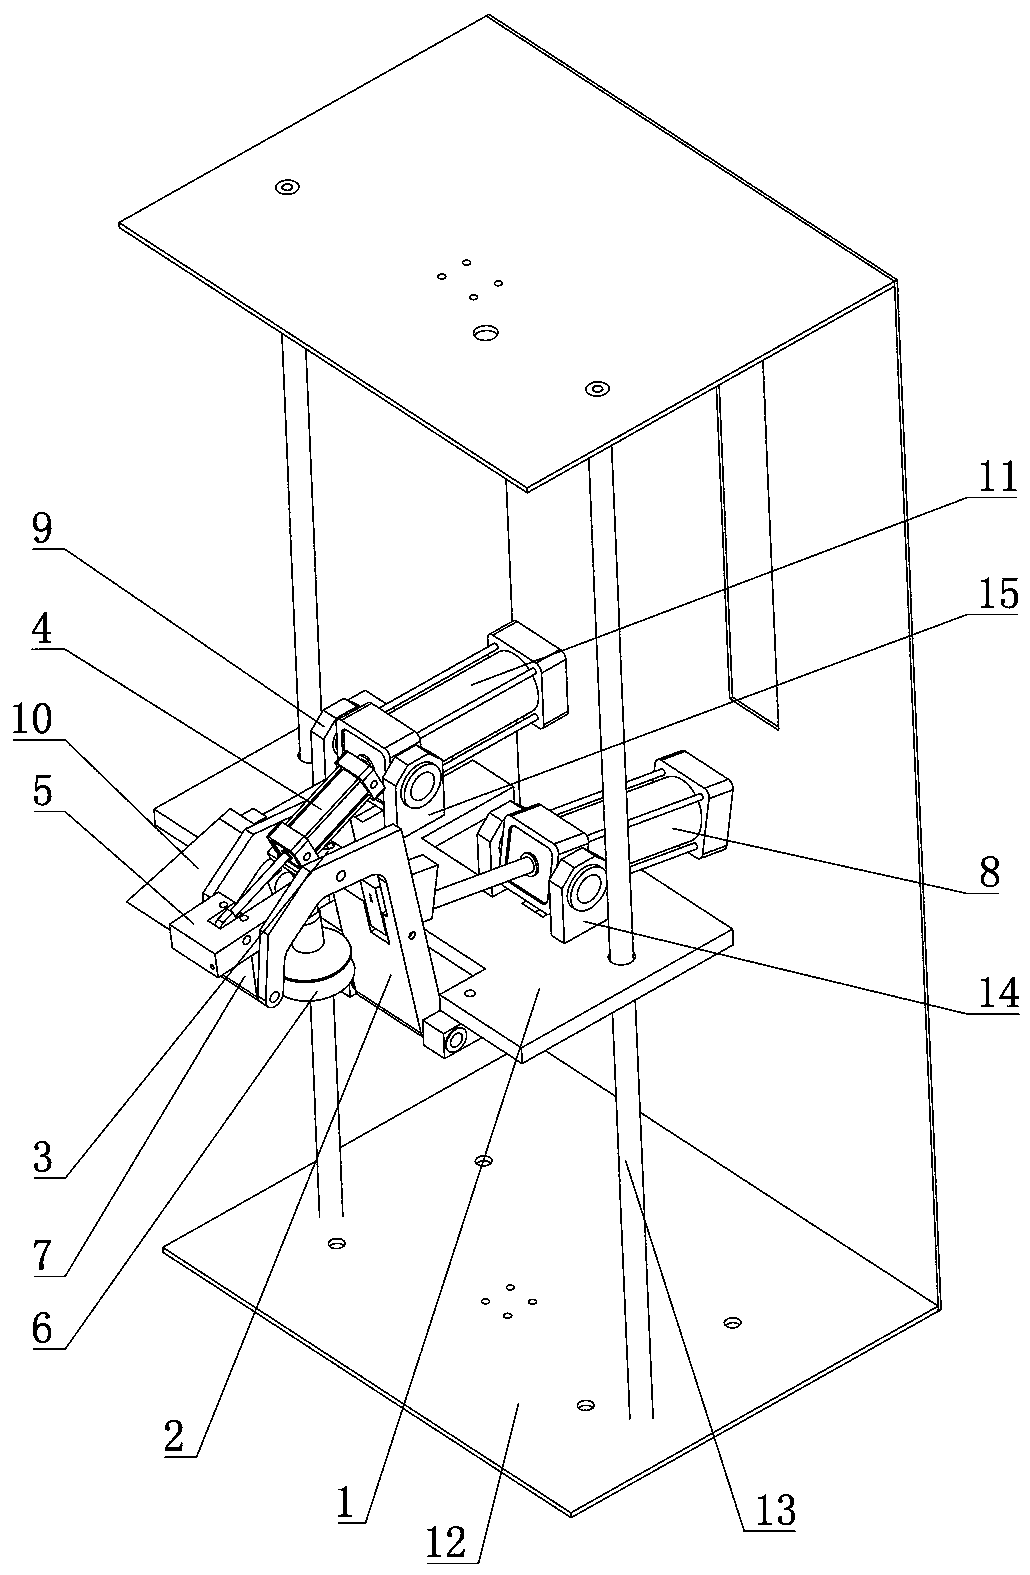 Interlayer paper divider of stacking machine